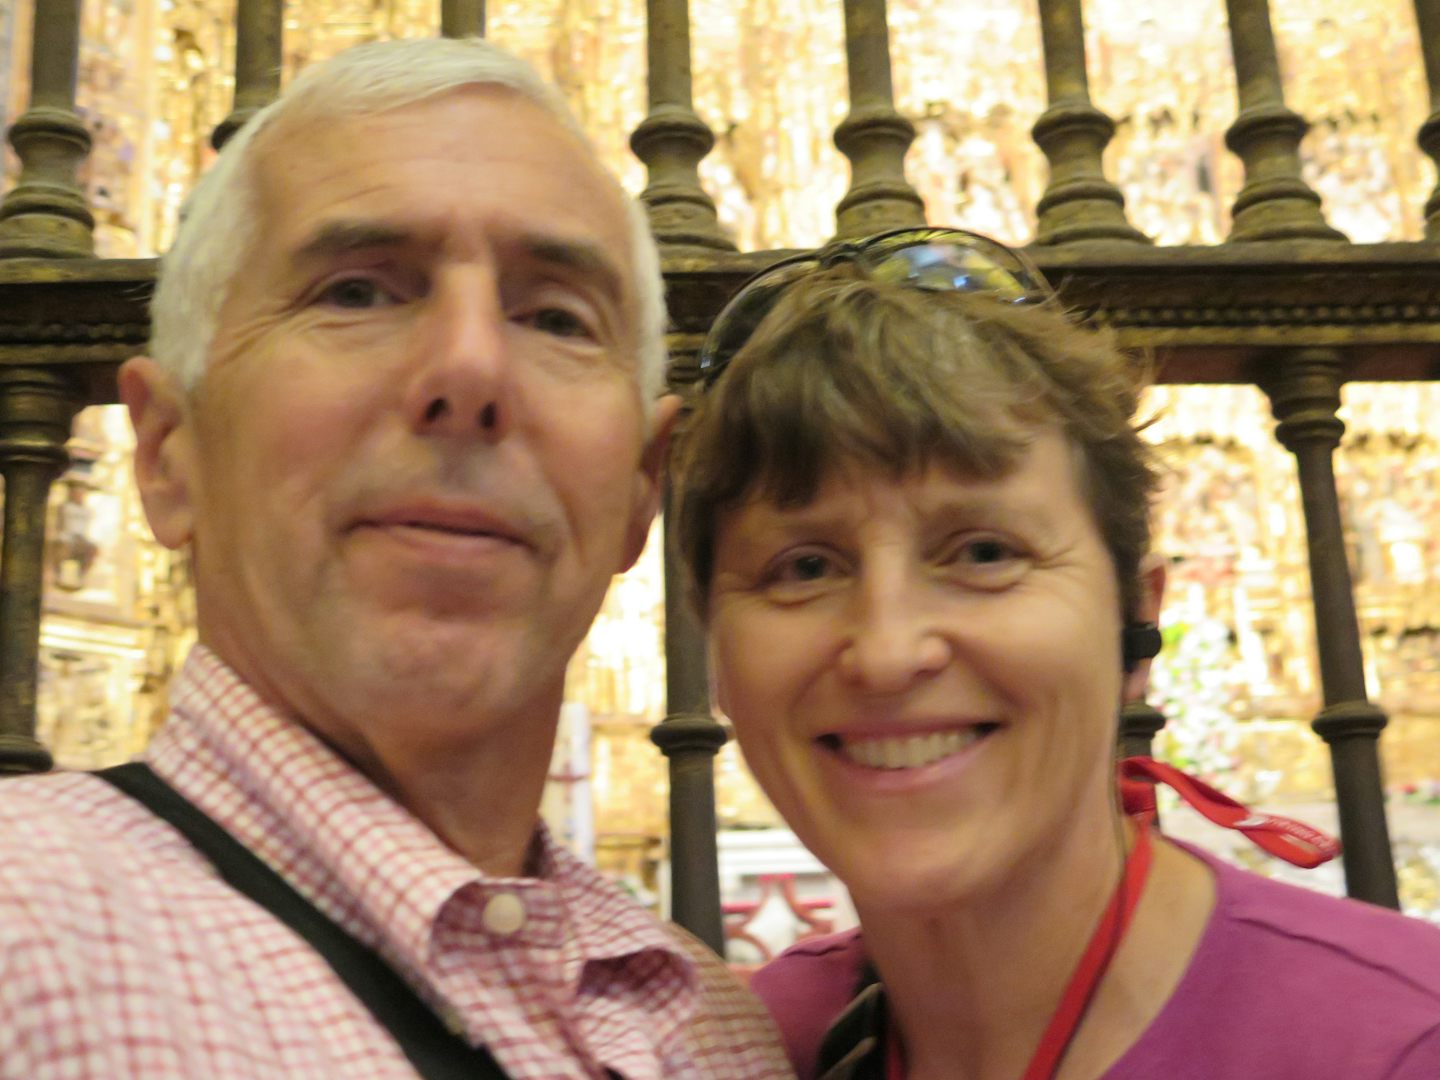 Us in front of gold altar in Seville